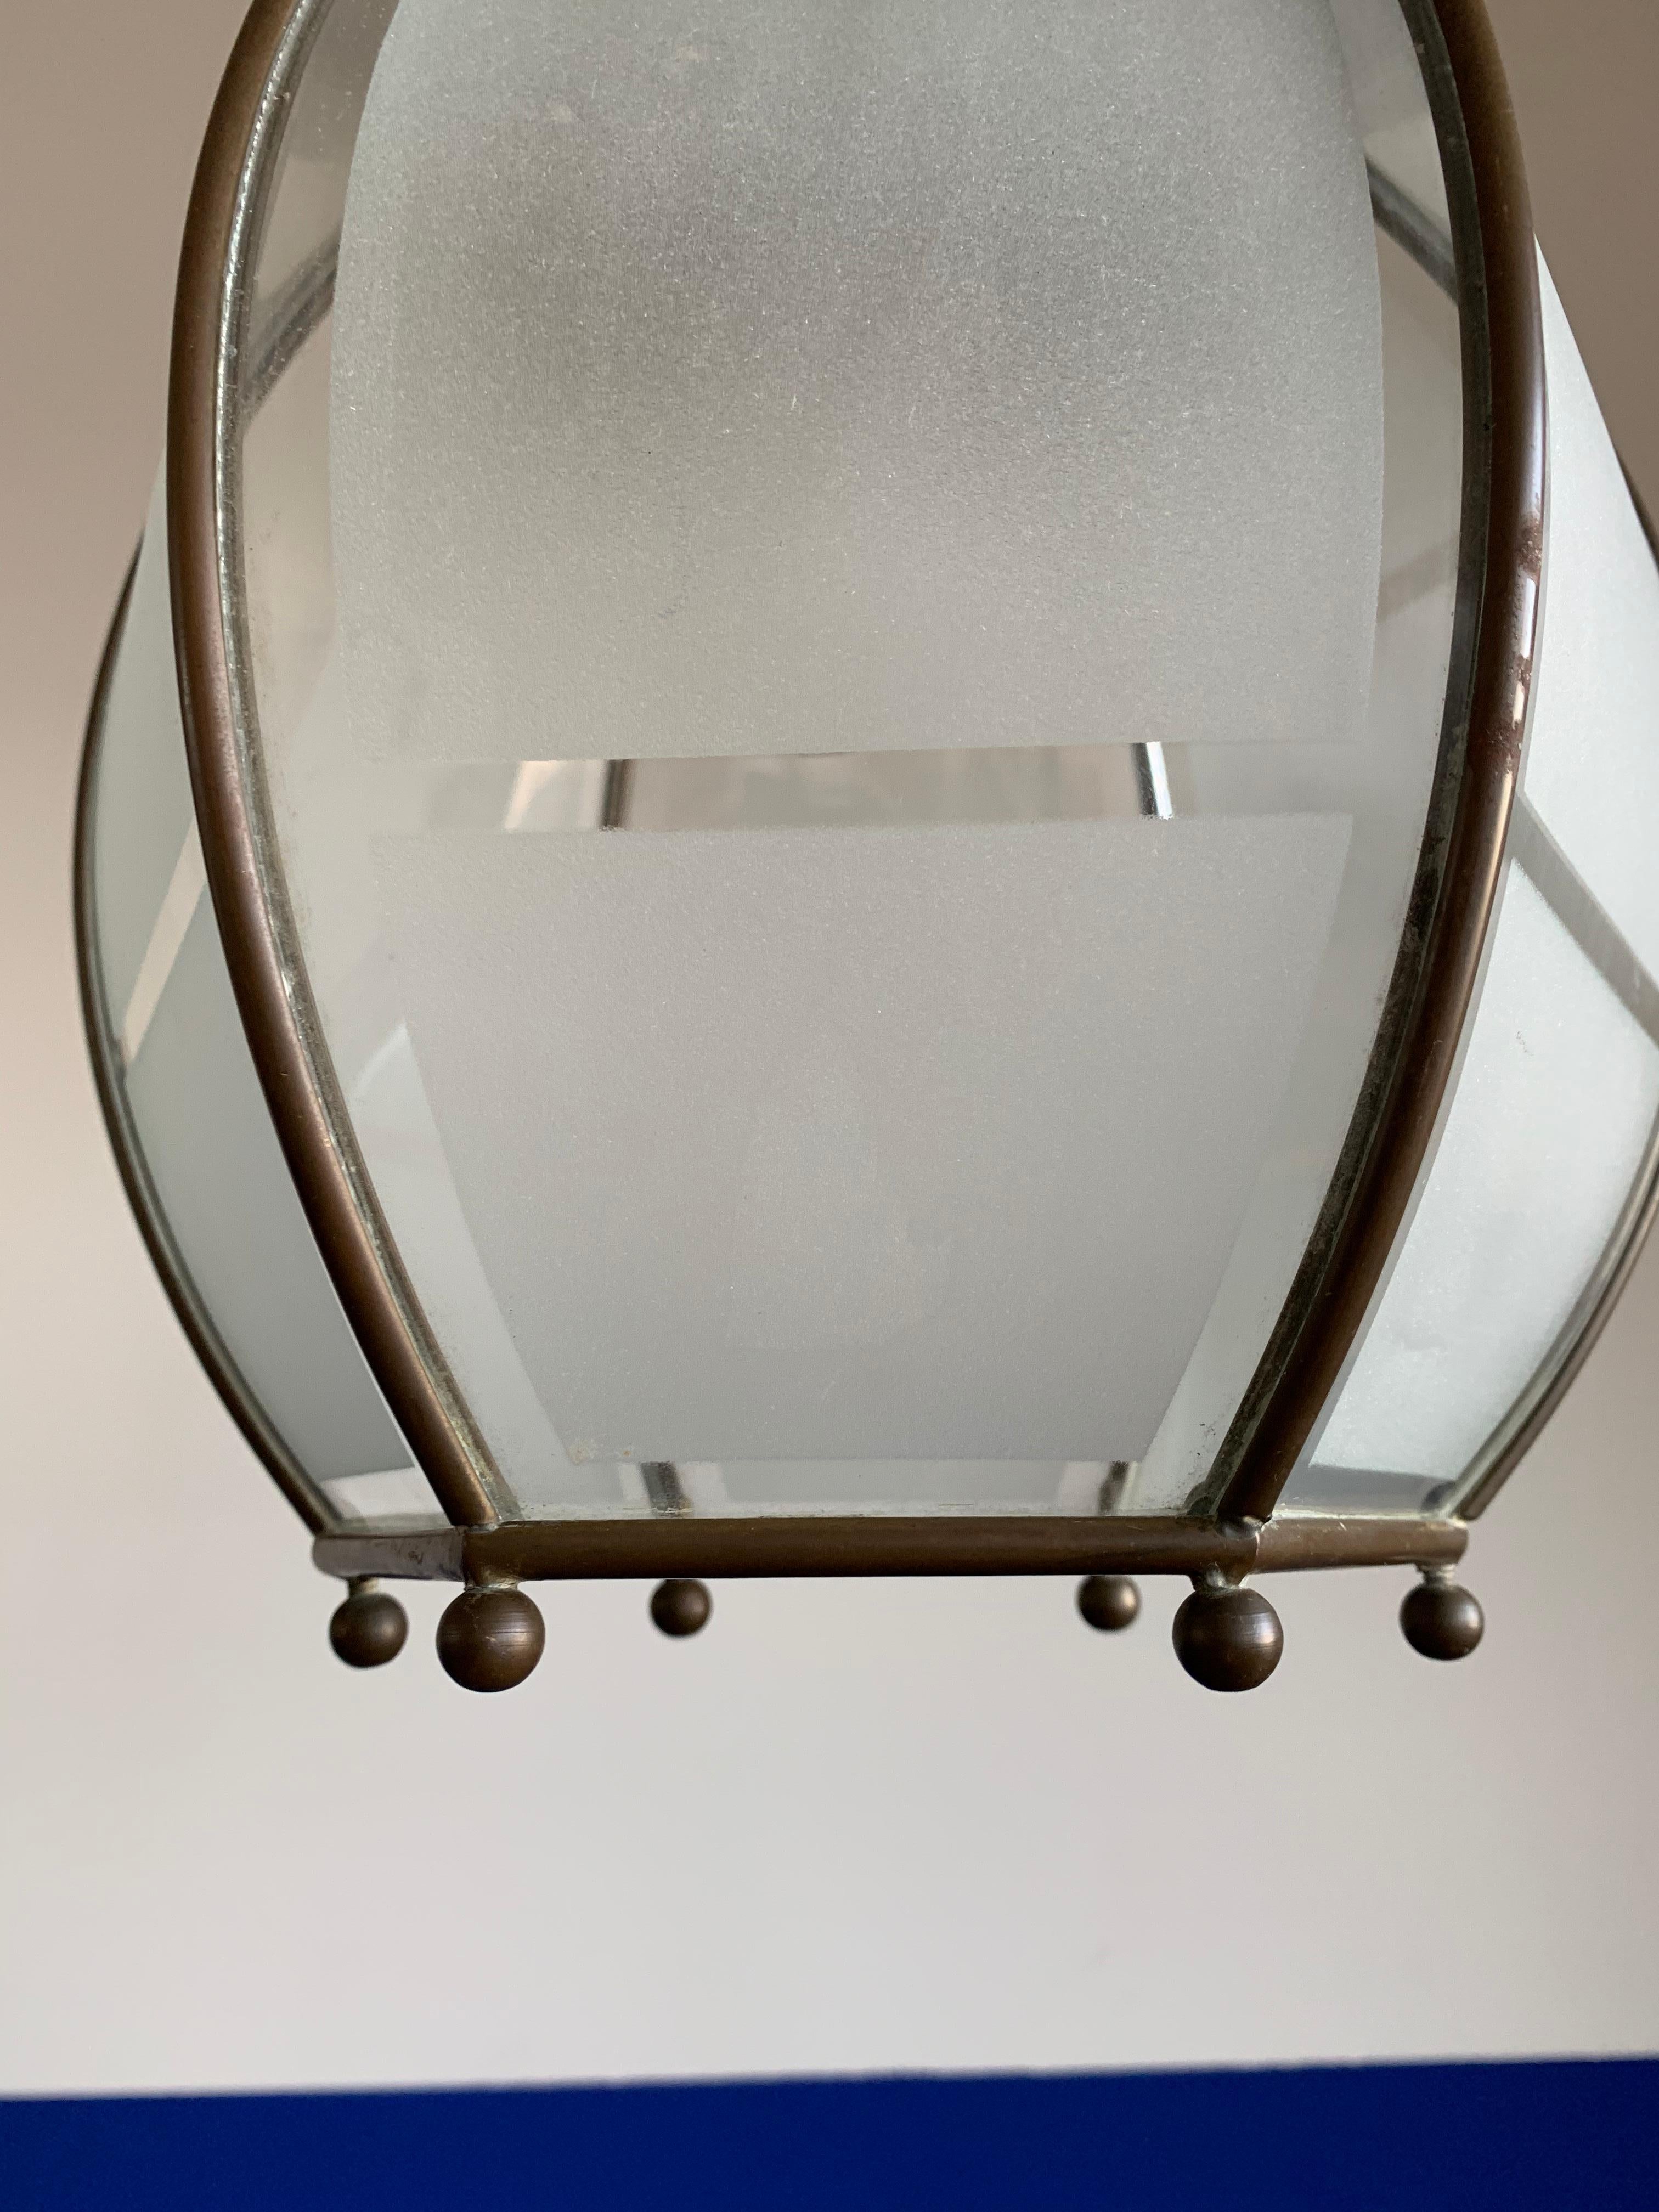 Marvelous Art Deco Design Glass and Brass Entry Hall Pendant Light Fixture 1